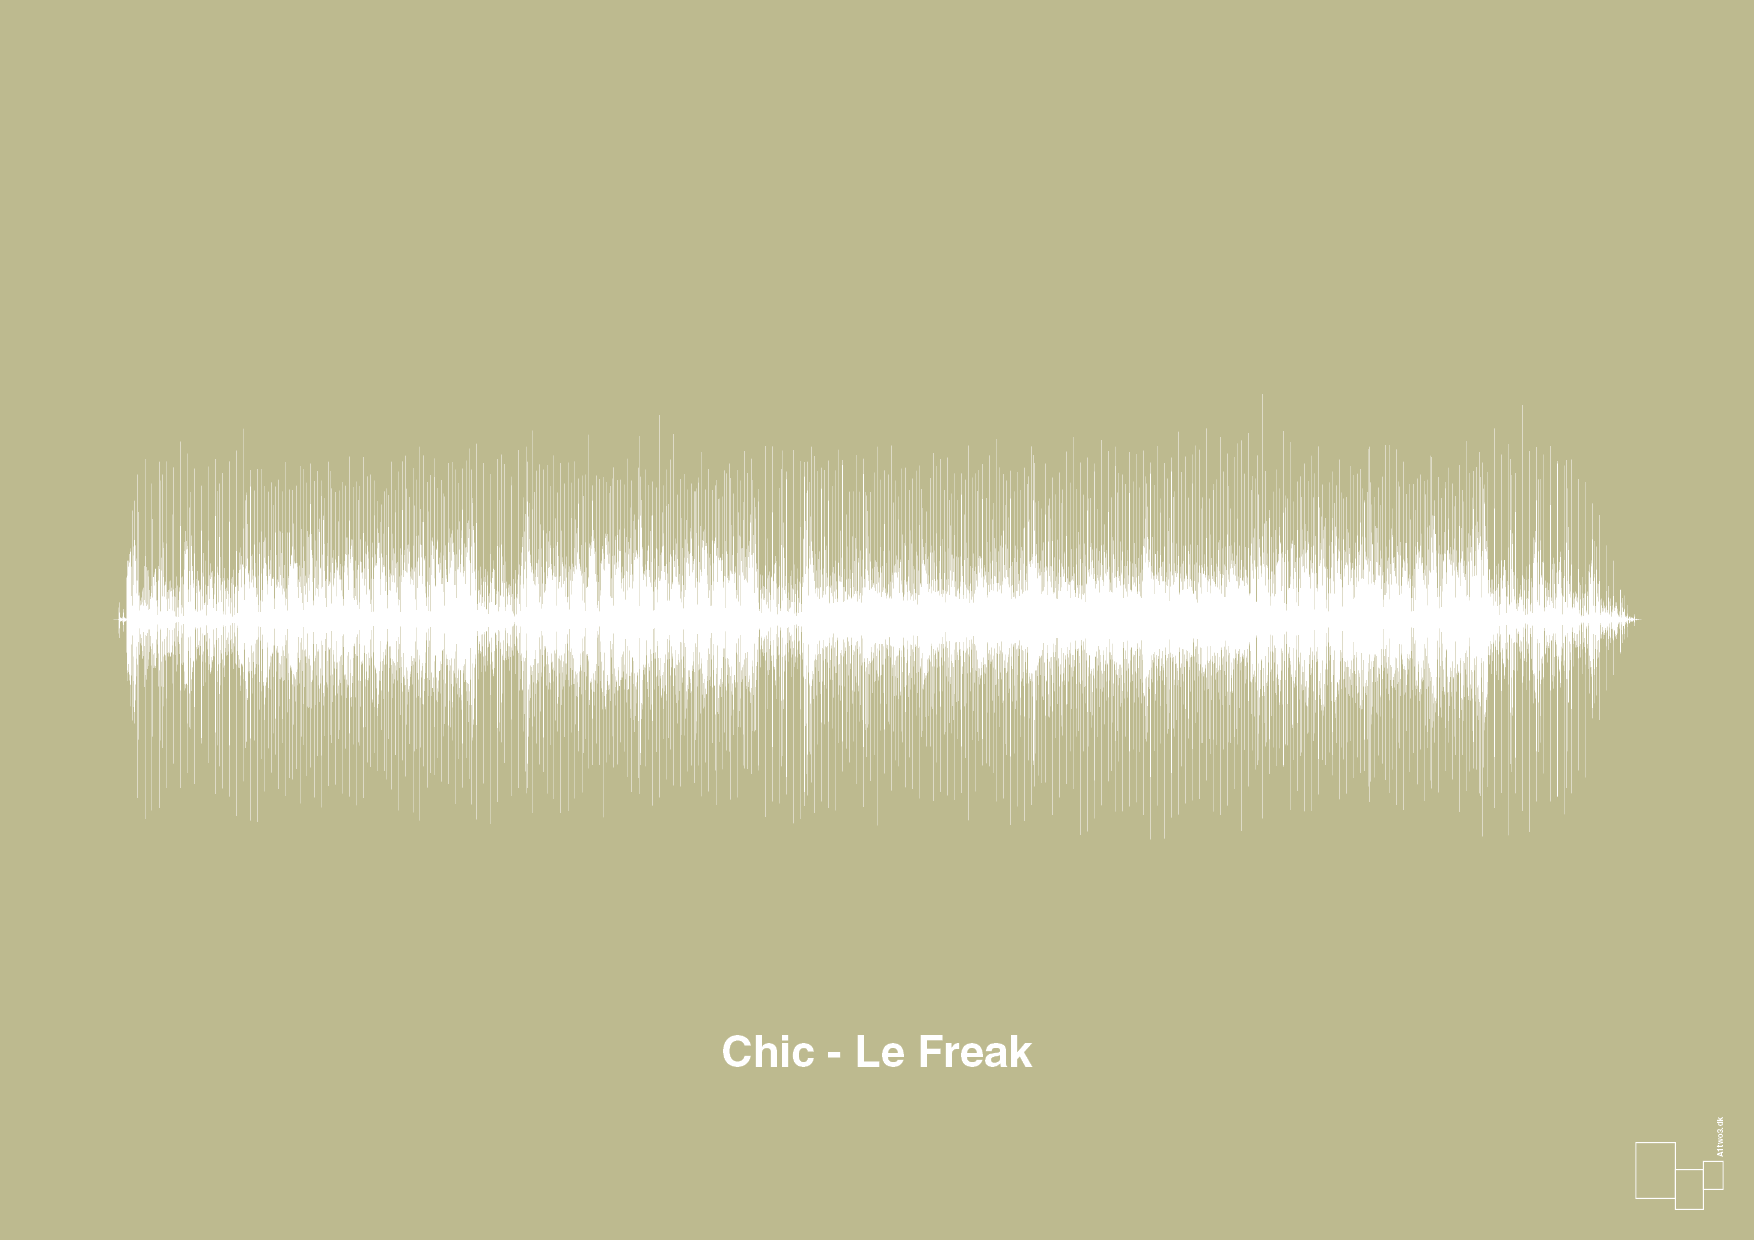 chic - le freak - Plakat med Musik i Back to Nature